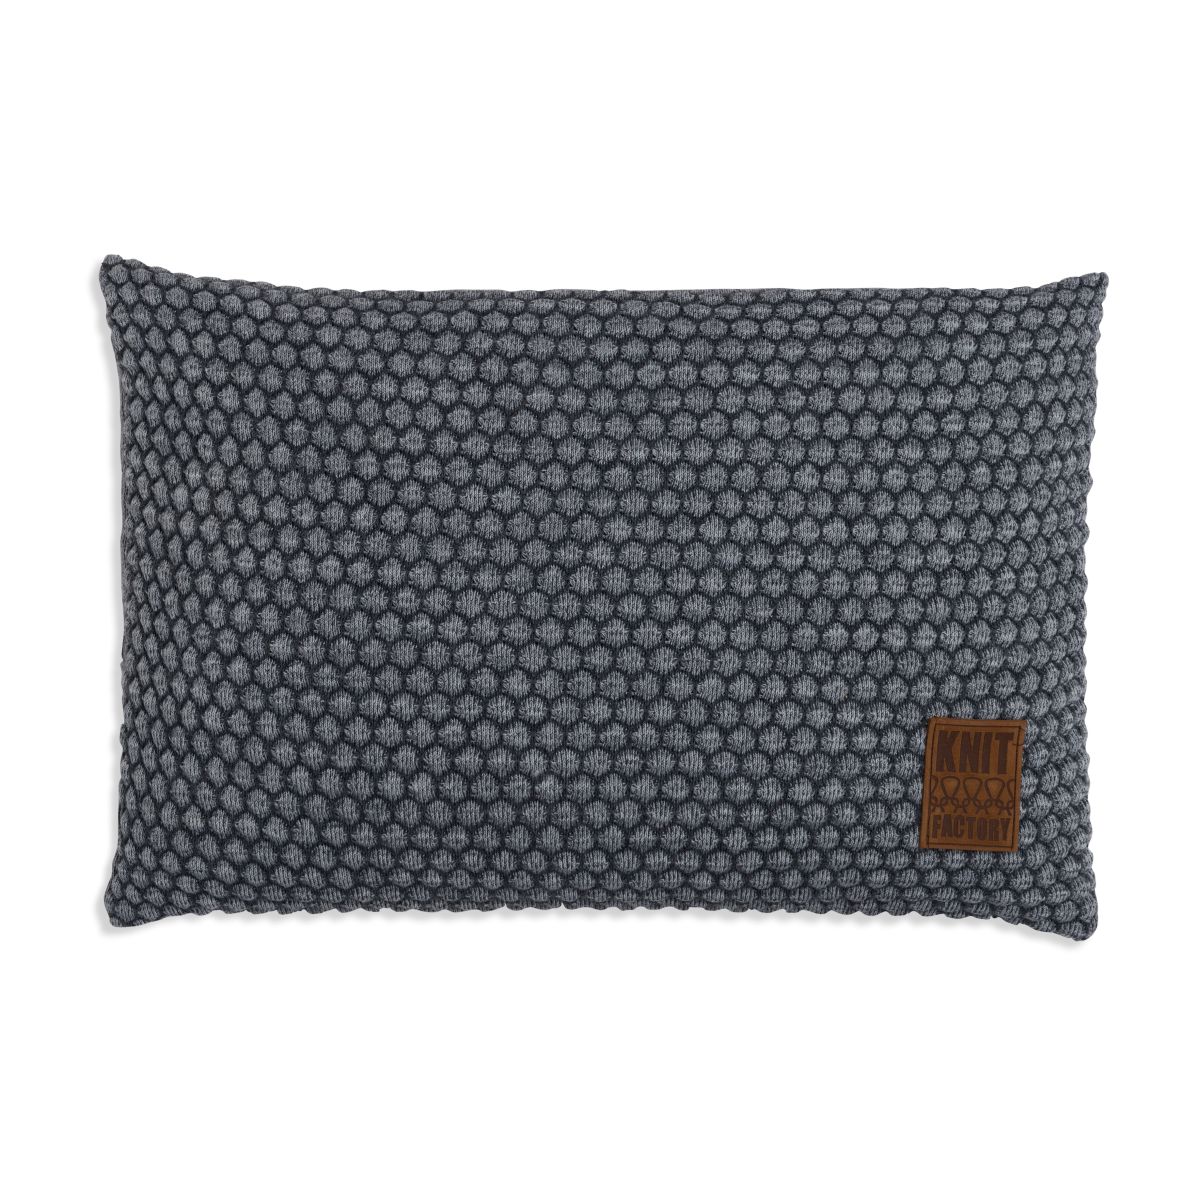 juul cushion anthracitelight grey 60x40